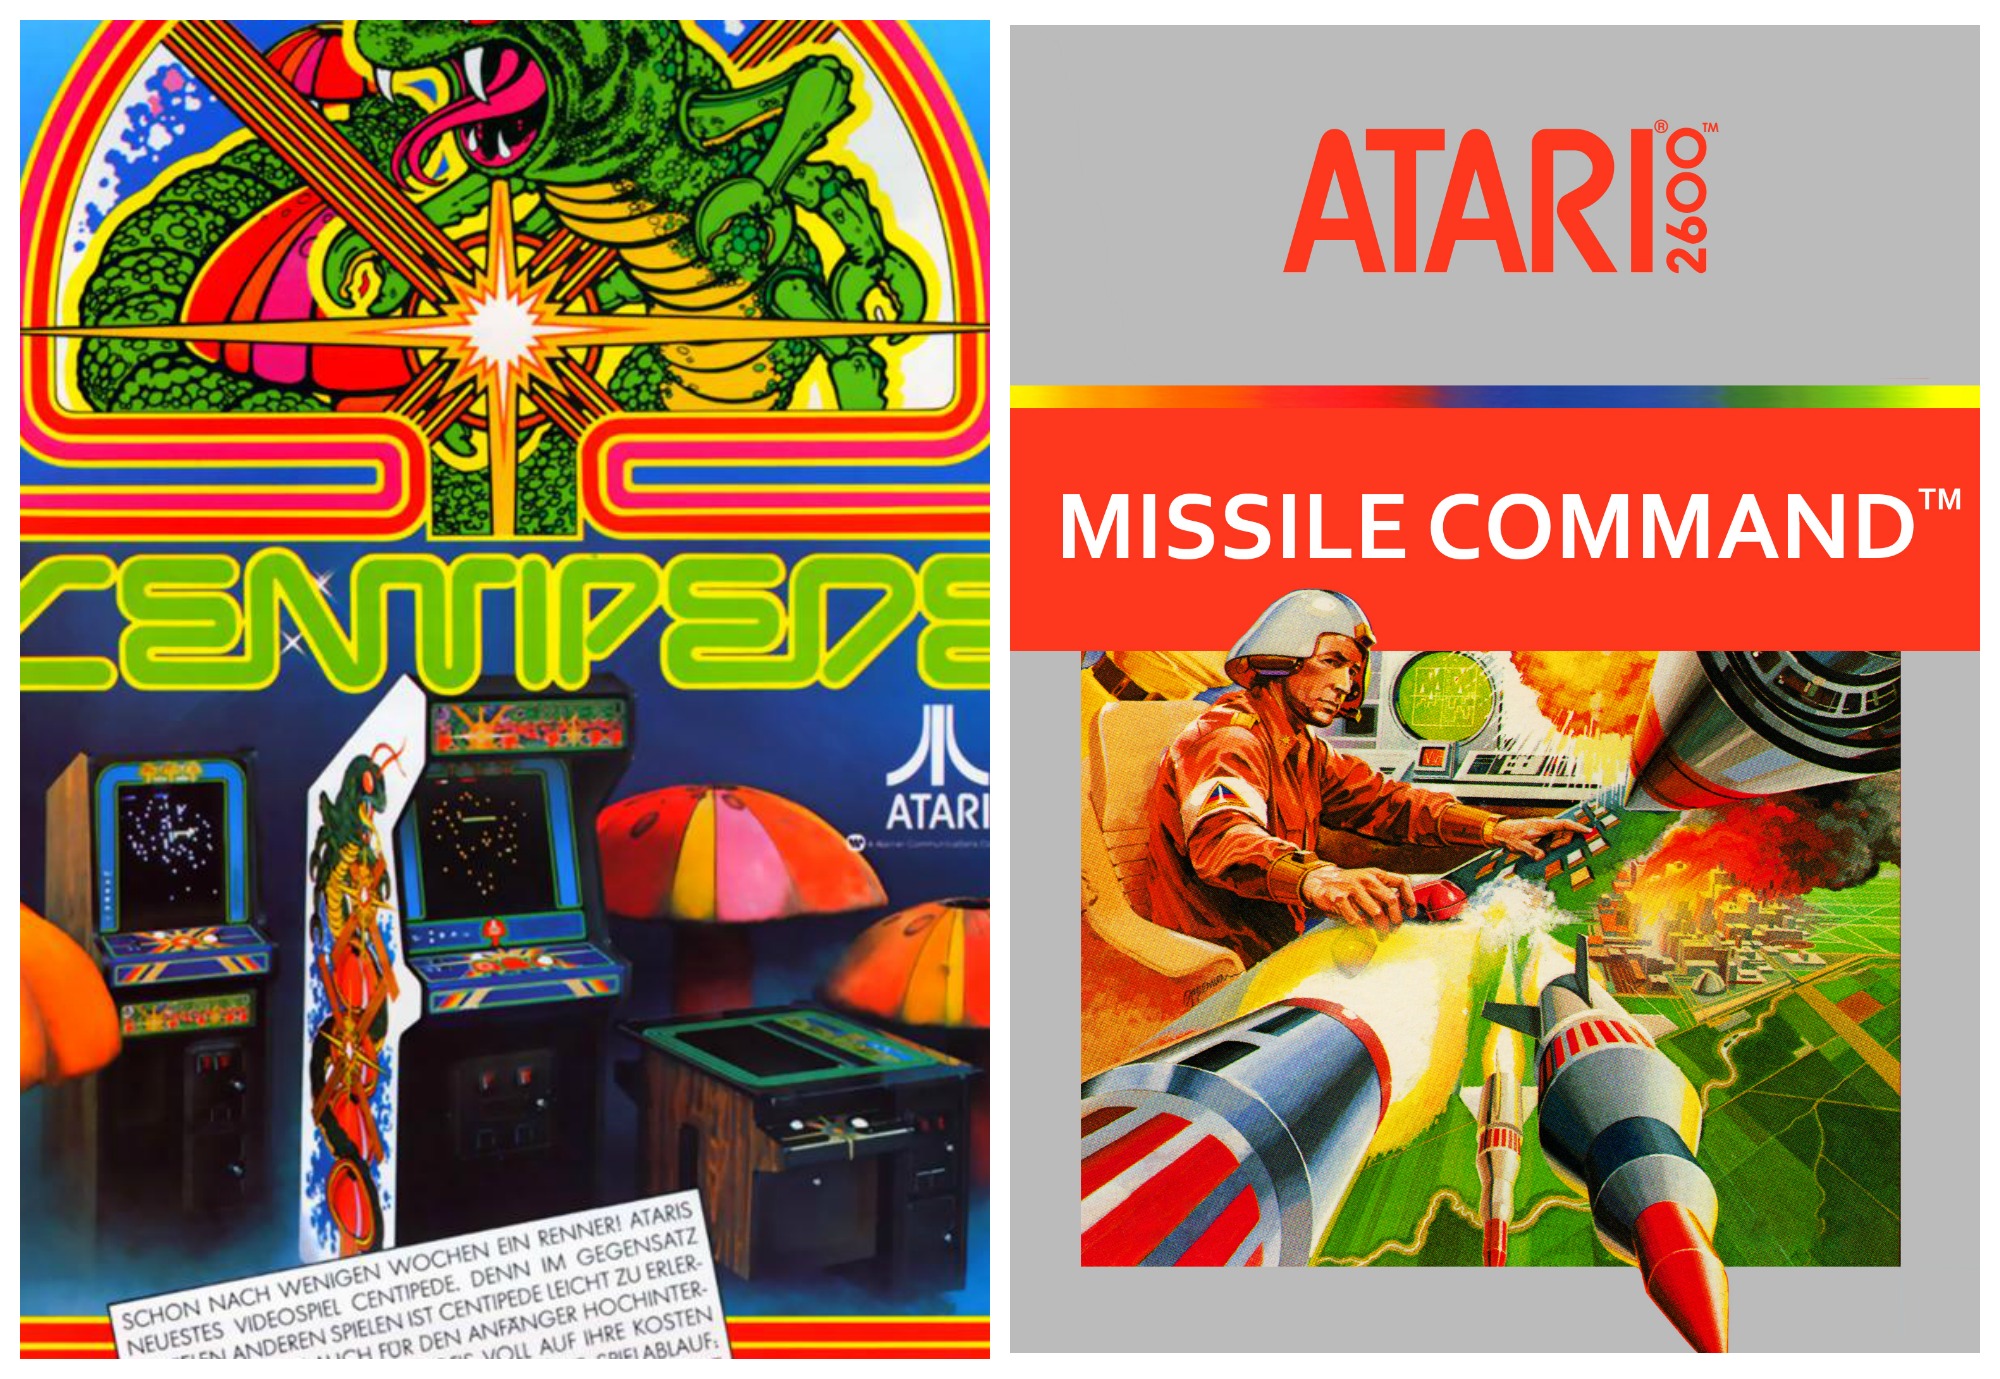 Juegos de Atari a la gran pantalla